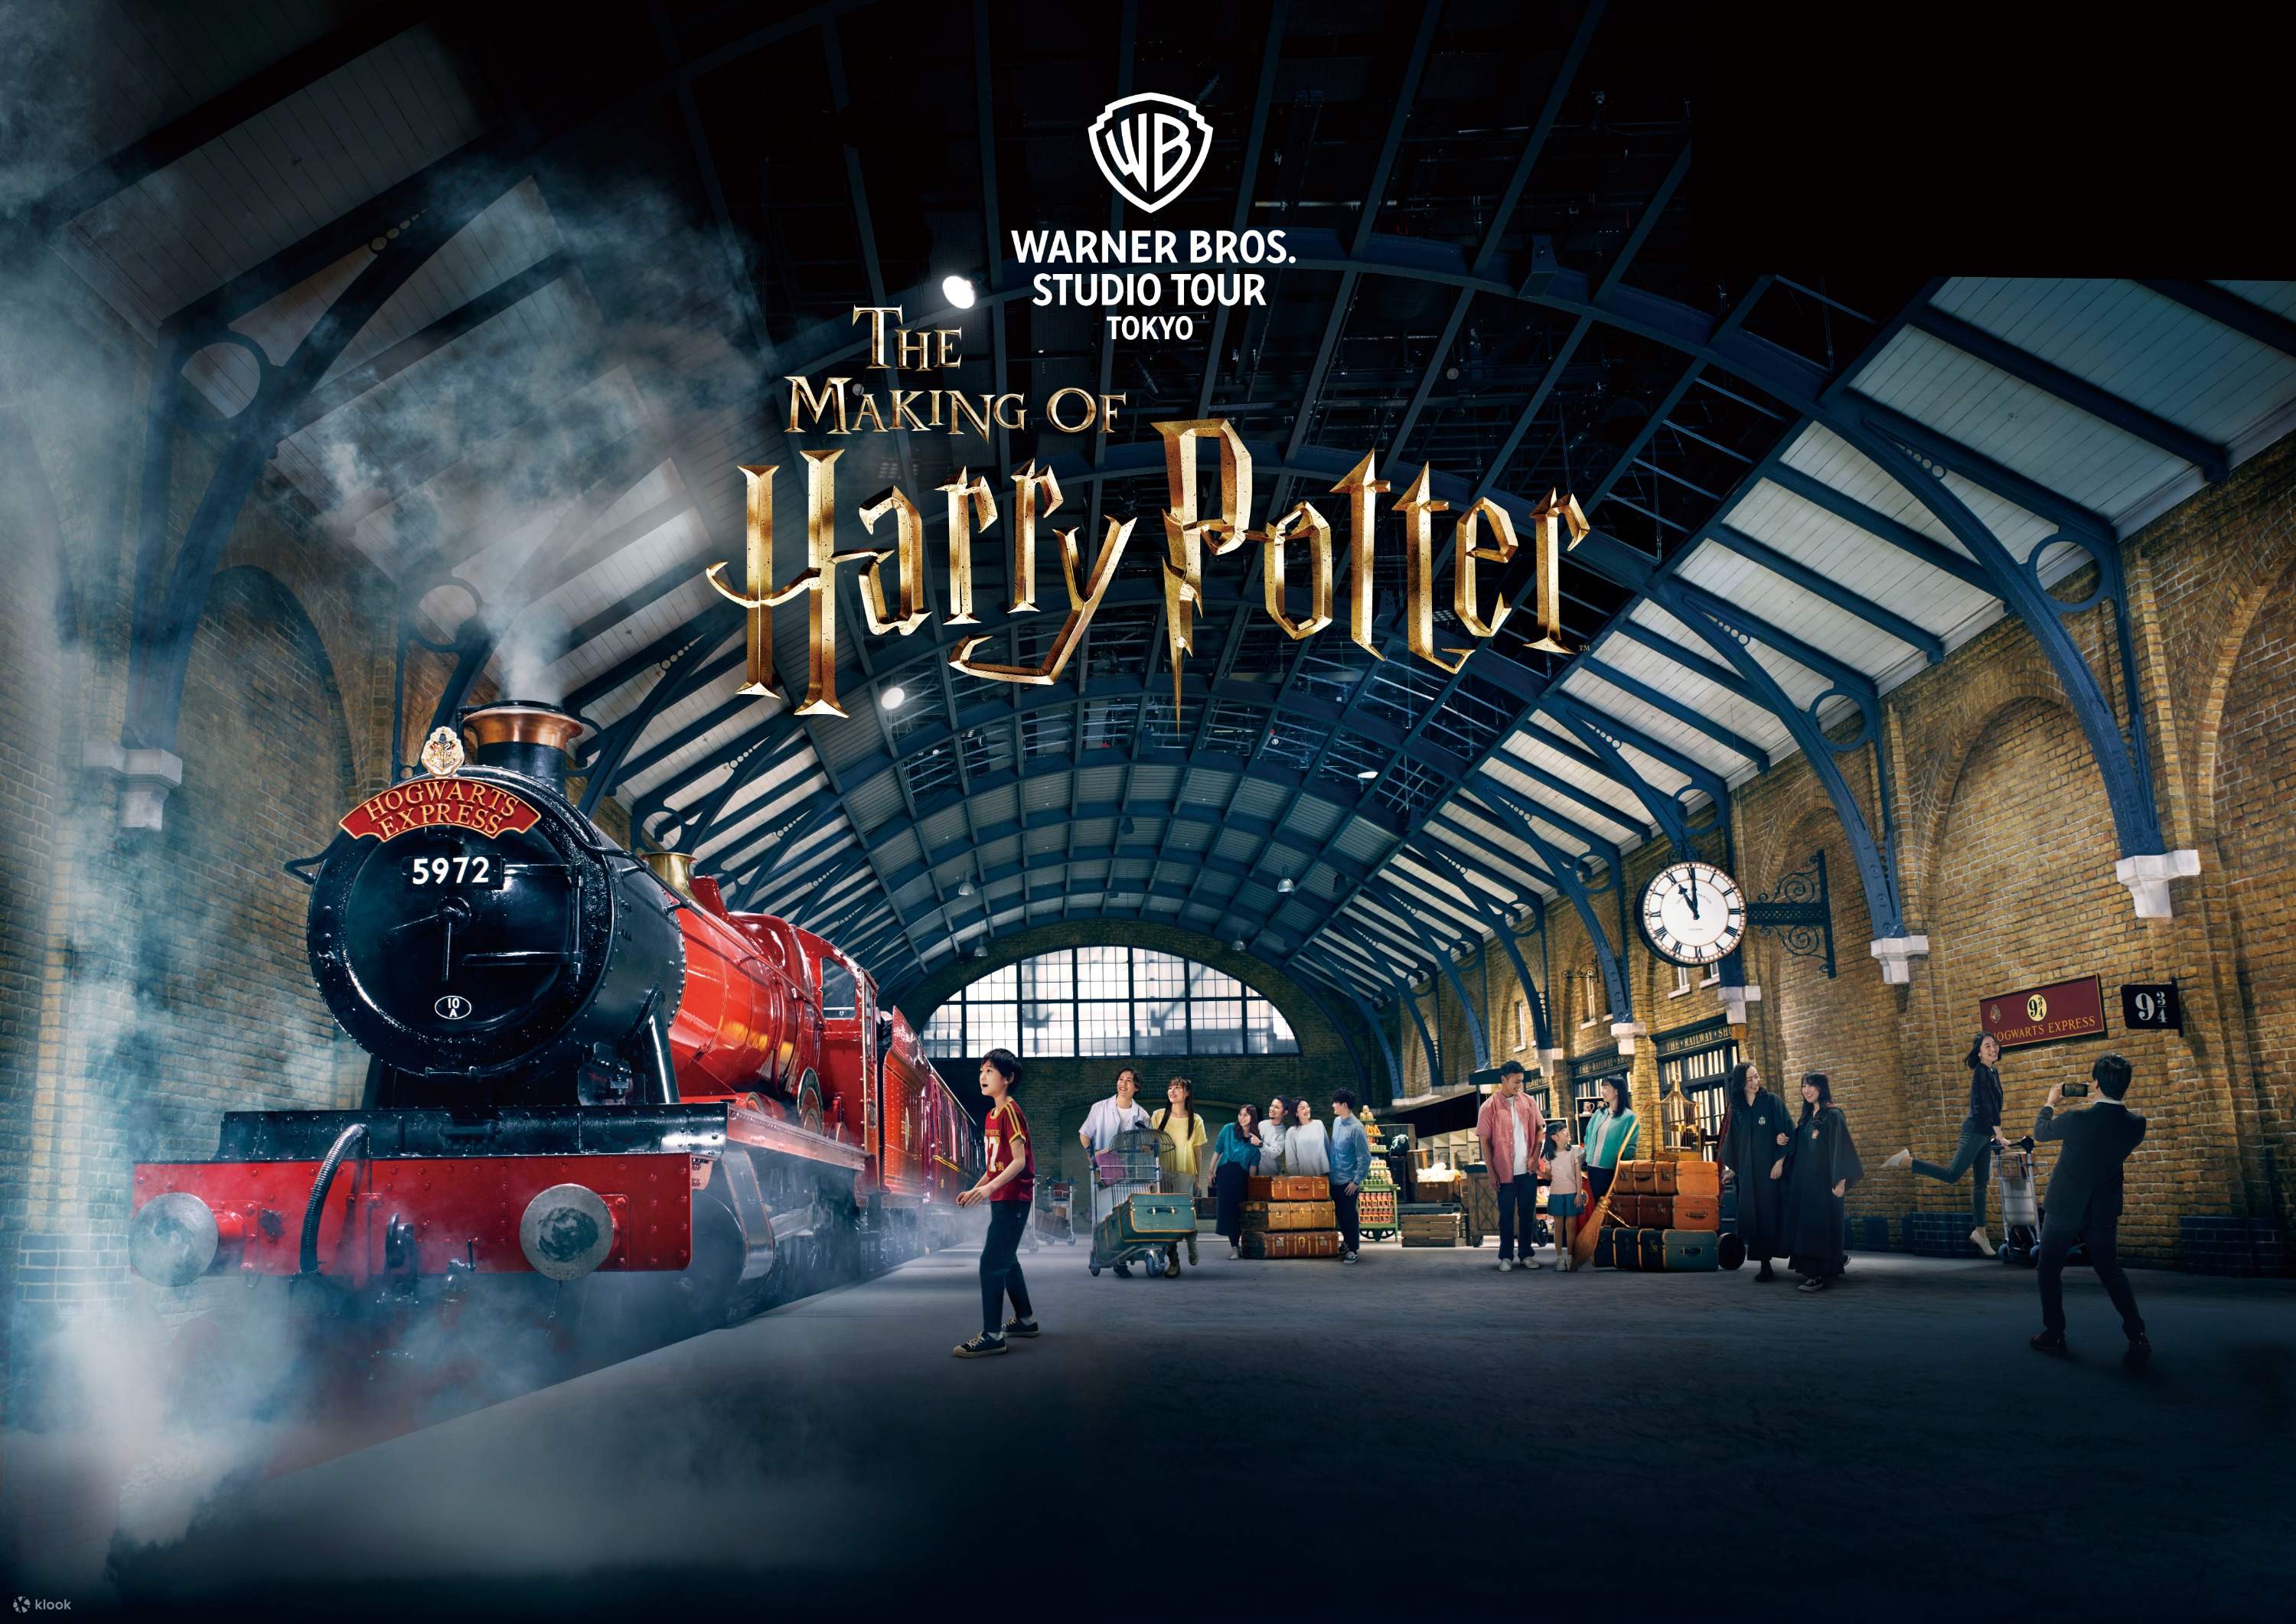 Warner Bros. Studio Tour Tokyo - The Making of Harry Potter - Klook Việt Nam